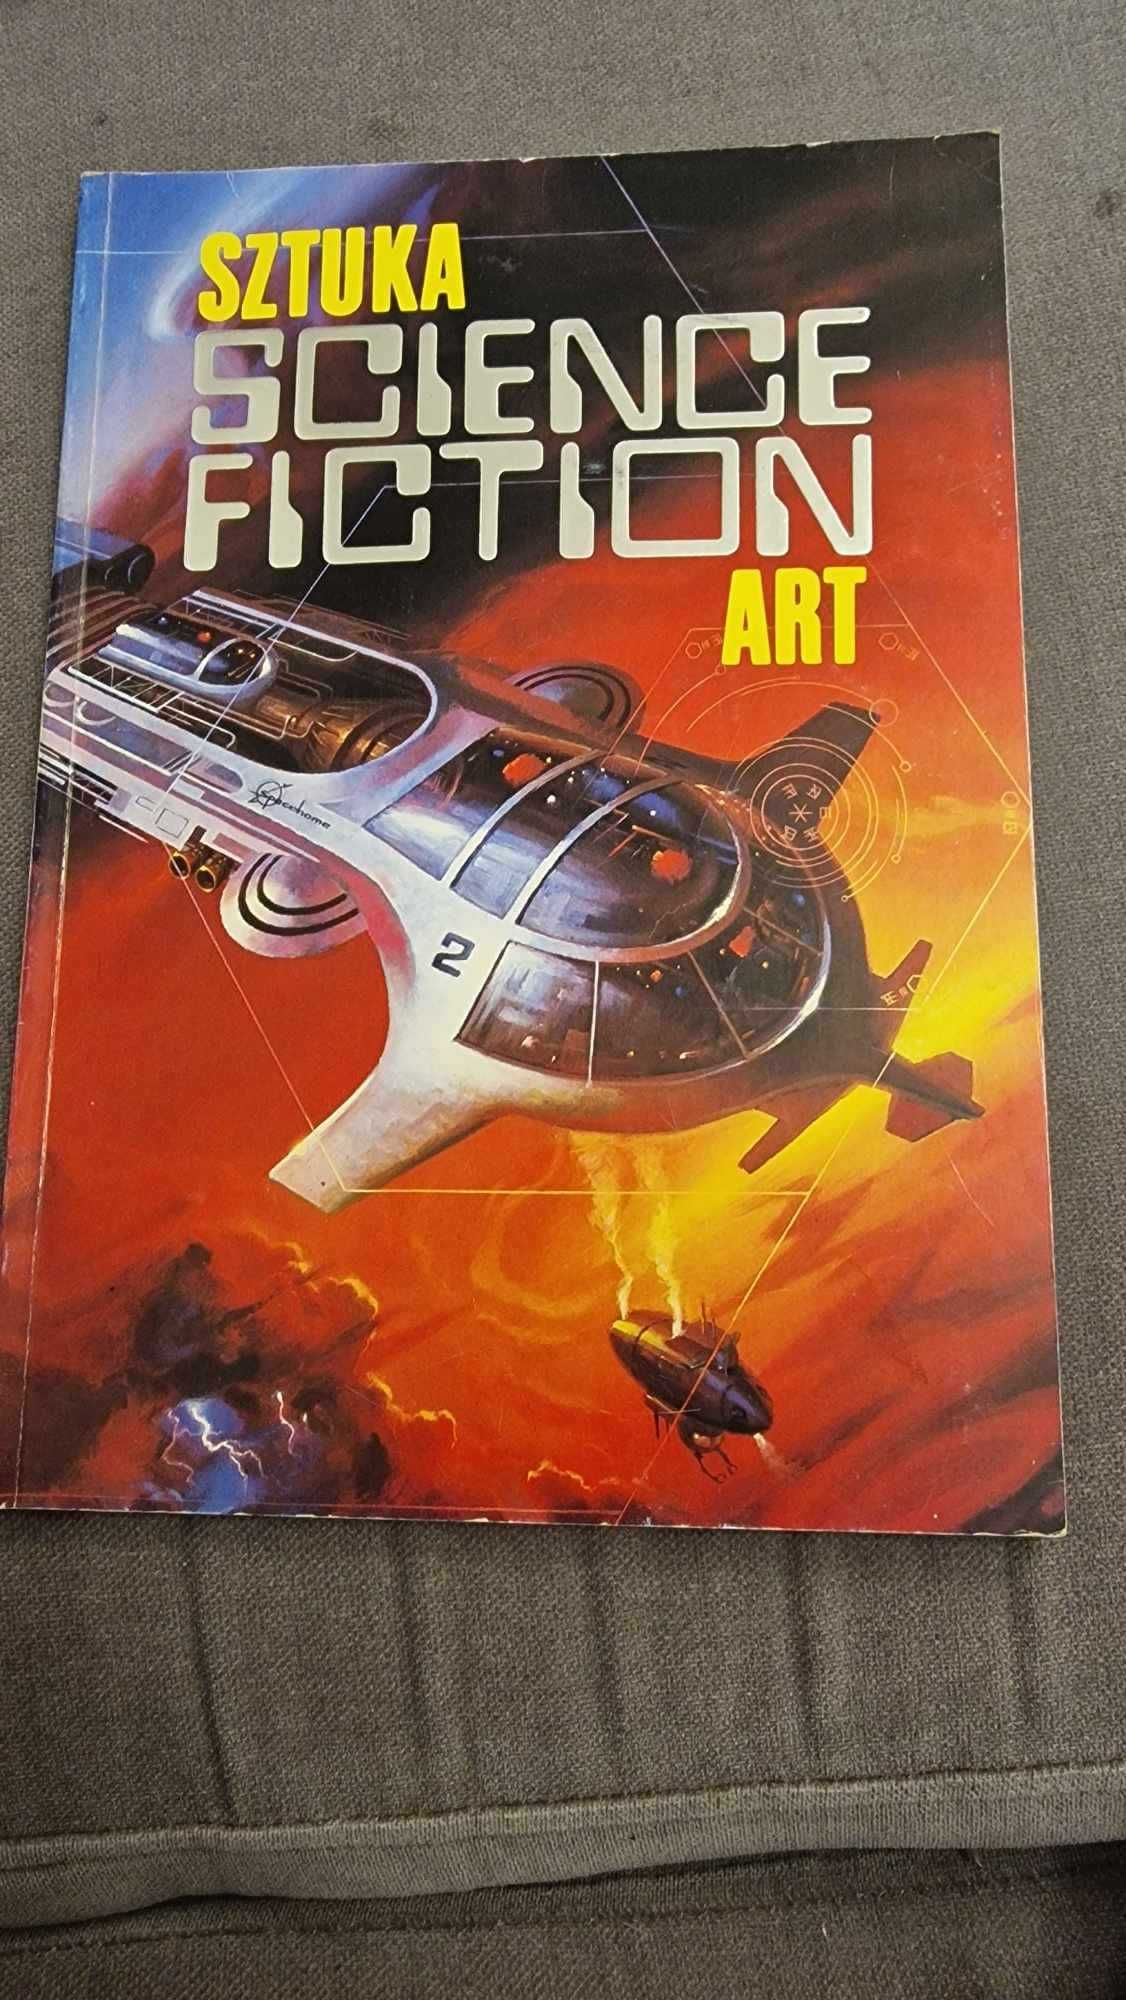 Sztuka Science Fiction Art